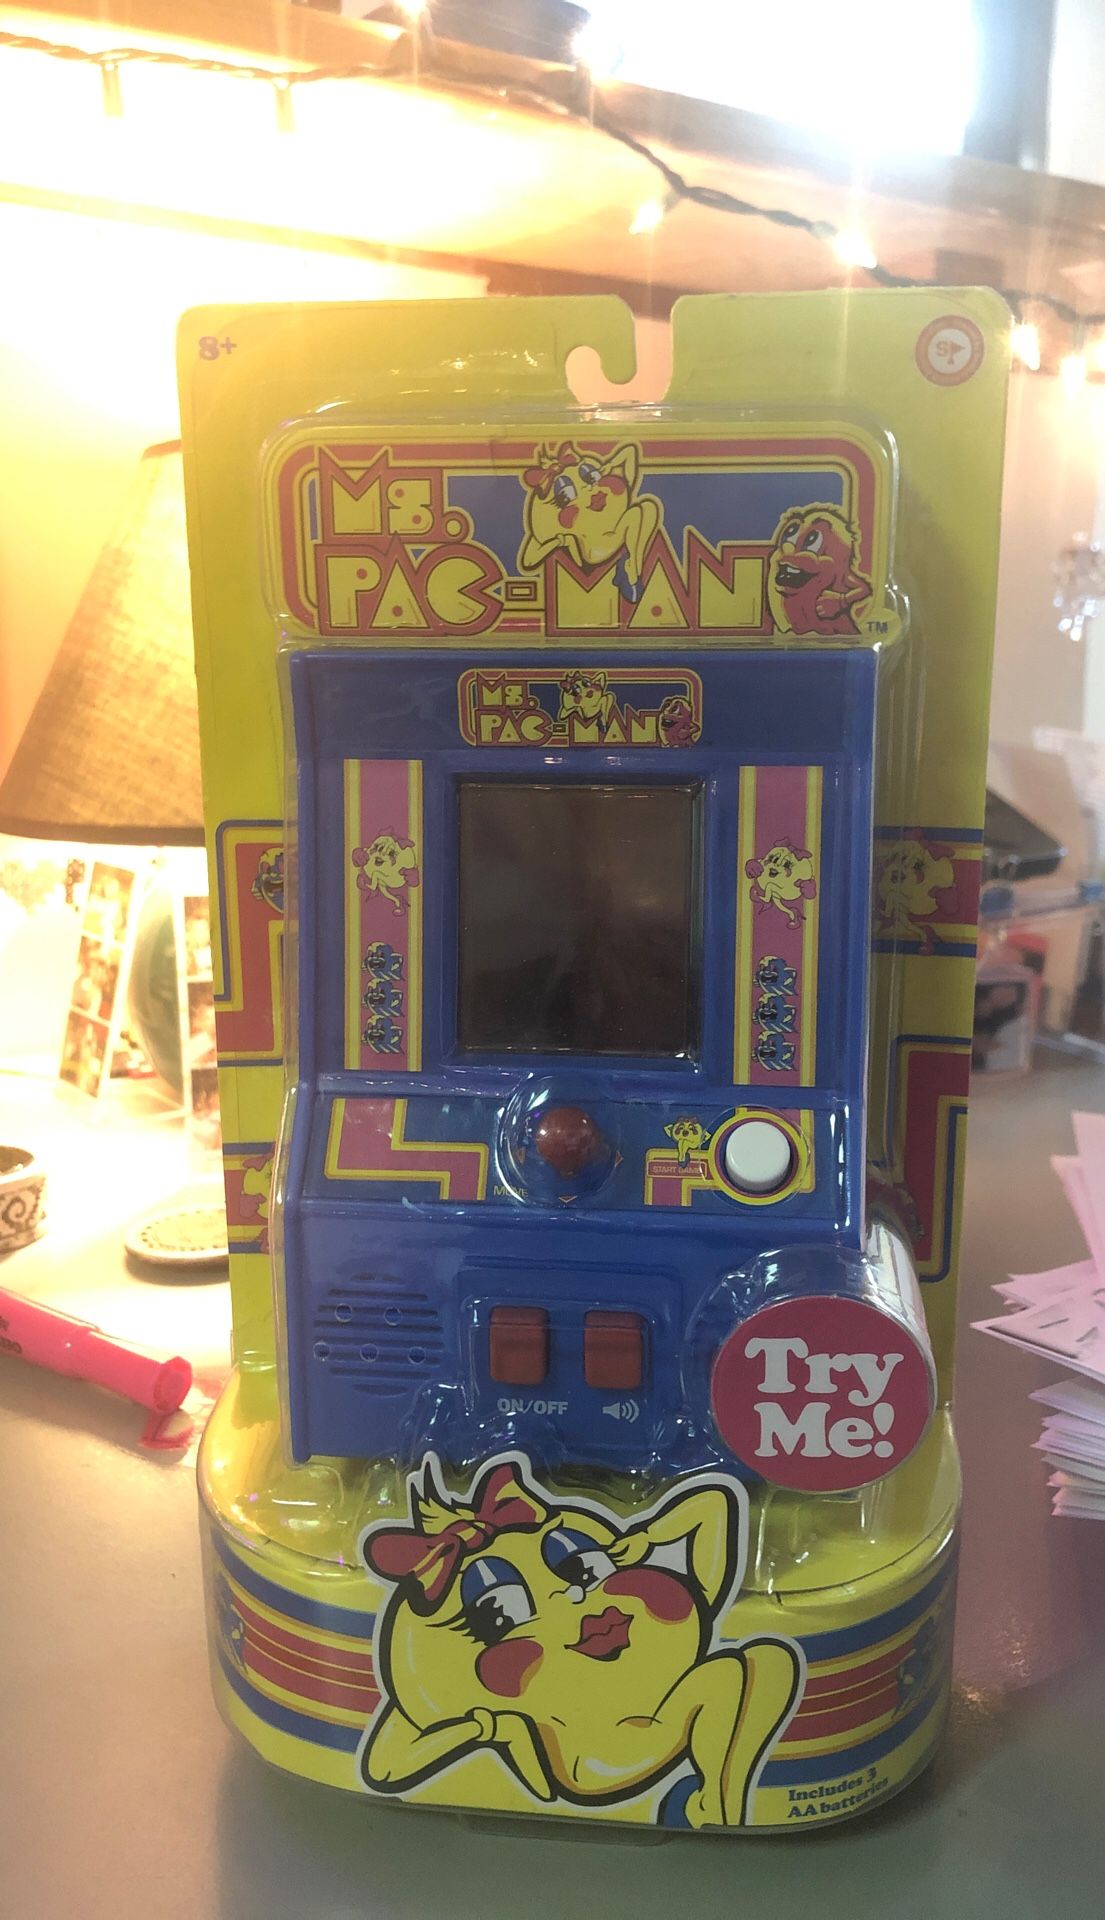 Ms Pac-Man mini arcade game